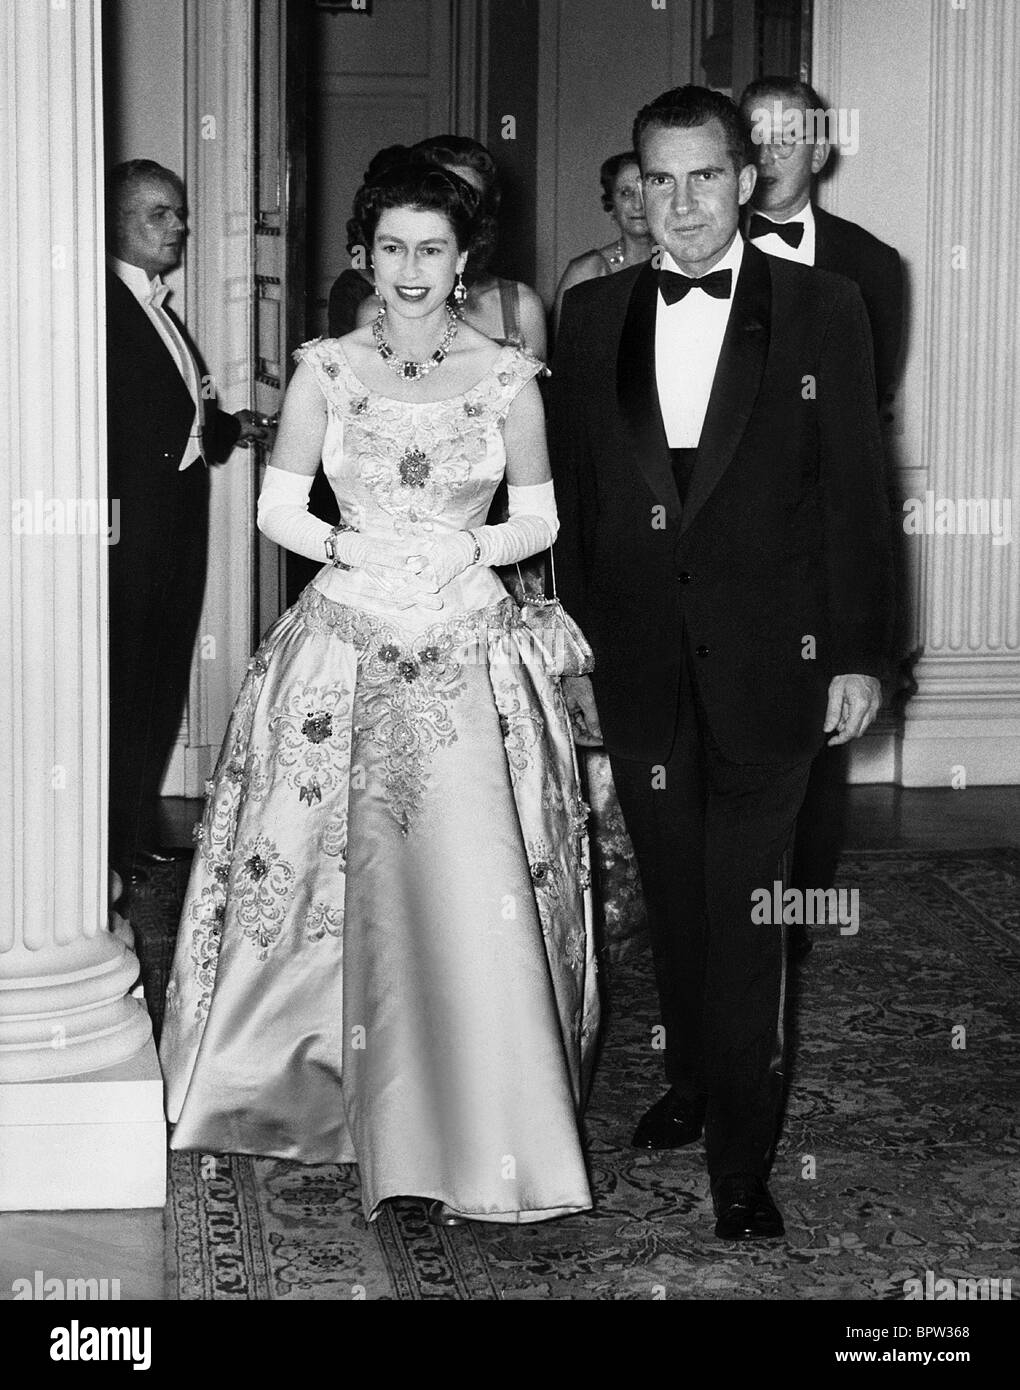 La reine Elizabeth II et Richard Nixon, reine d'angleterre 10 Juin 1958 Banque D'Images